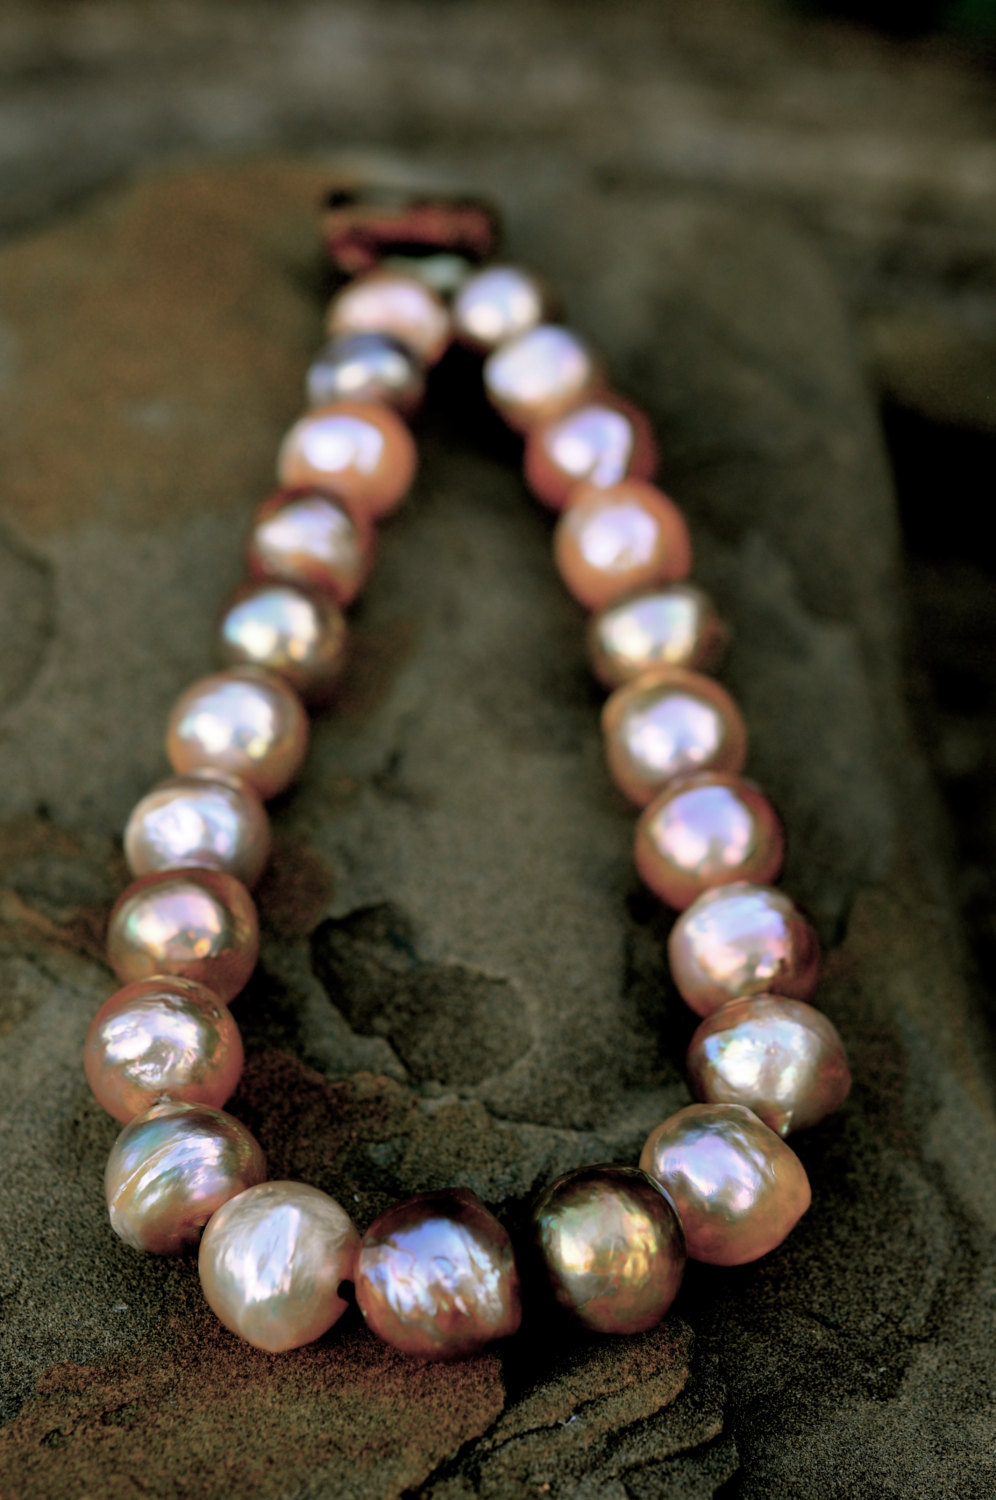 stunning baroque pearl choker, multi-colored strong light baroque pearls, rare bright baroque pearls, seriously stylish tight choker!